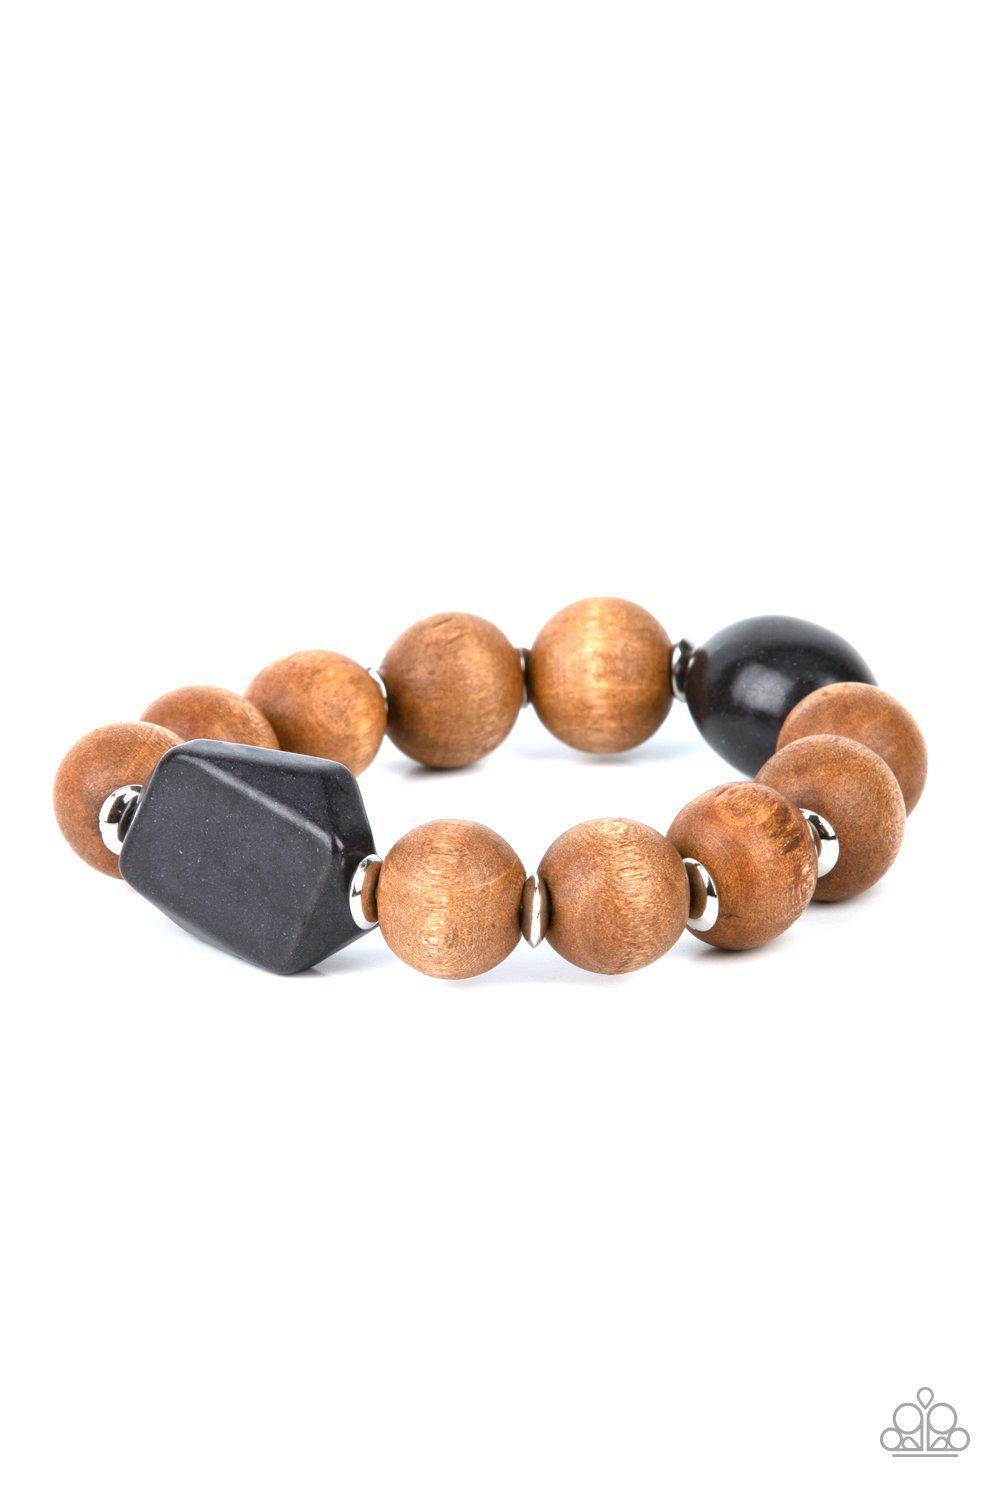 Abundantly Artisan Black Stone and Brown Wood Bracelet - Paparazzi Accessories - lightbox -CarasShop.com - $5 Jewelry by Cara Jewels